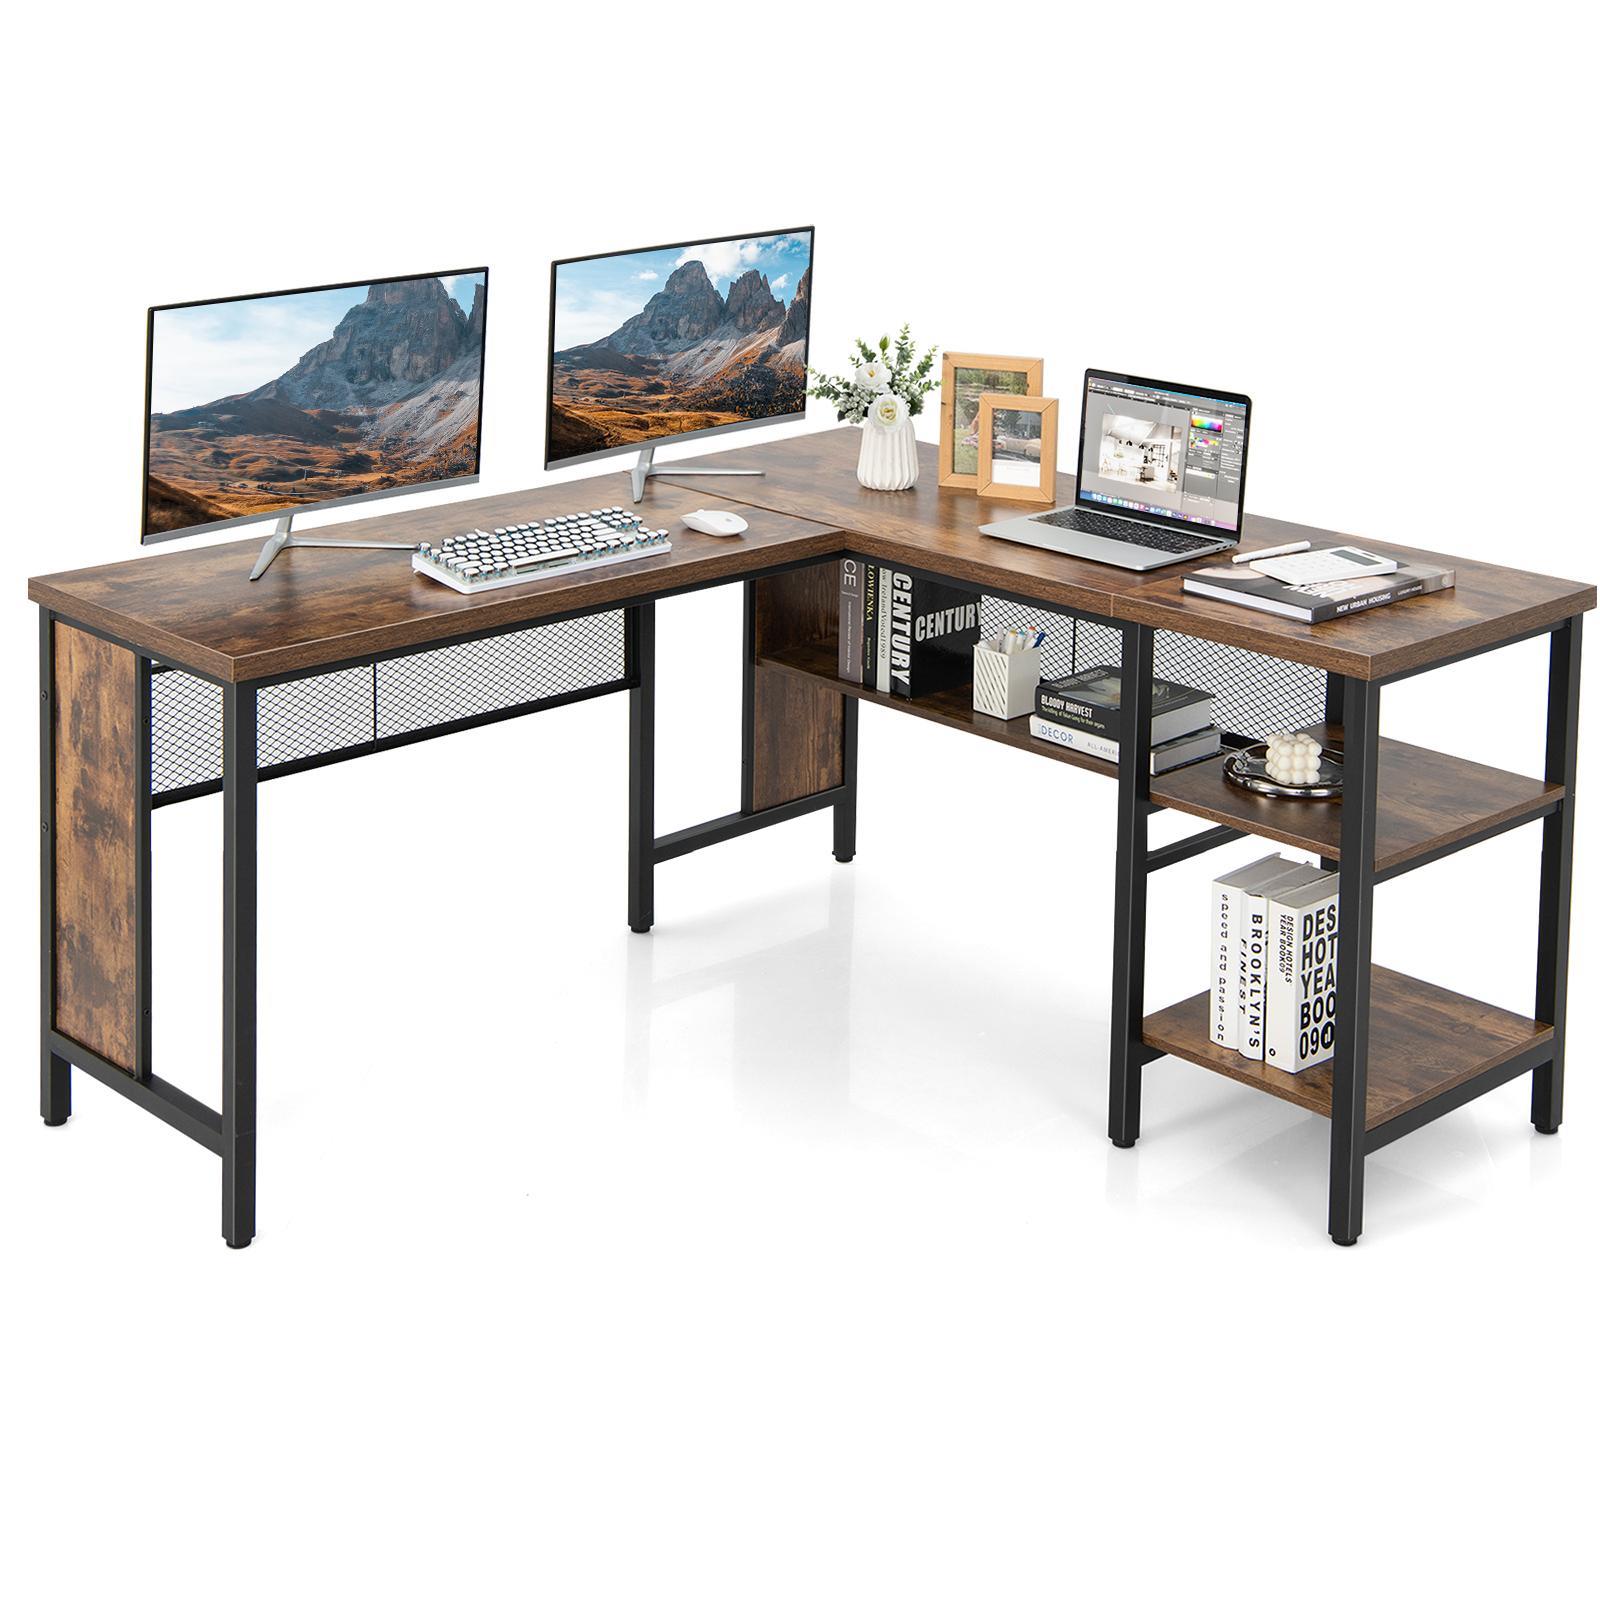 Giantex 1.5M L-shaped Office Desk CornerDesk w/Shelves Writing Desk Computer Workstation Brown